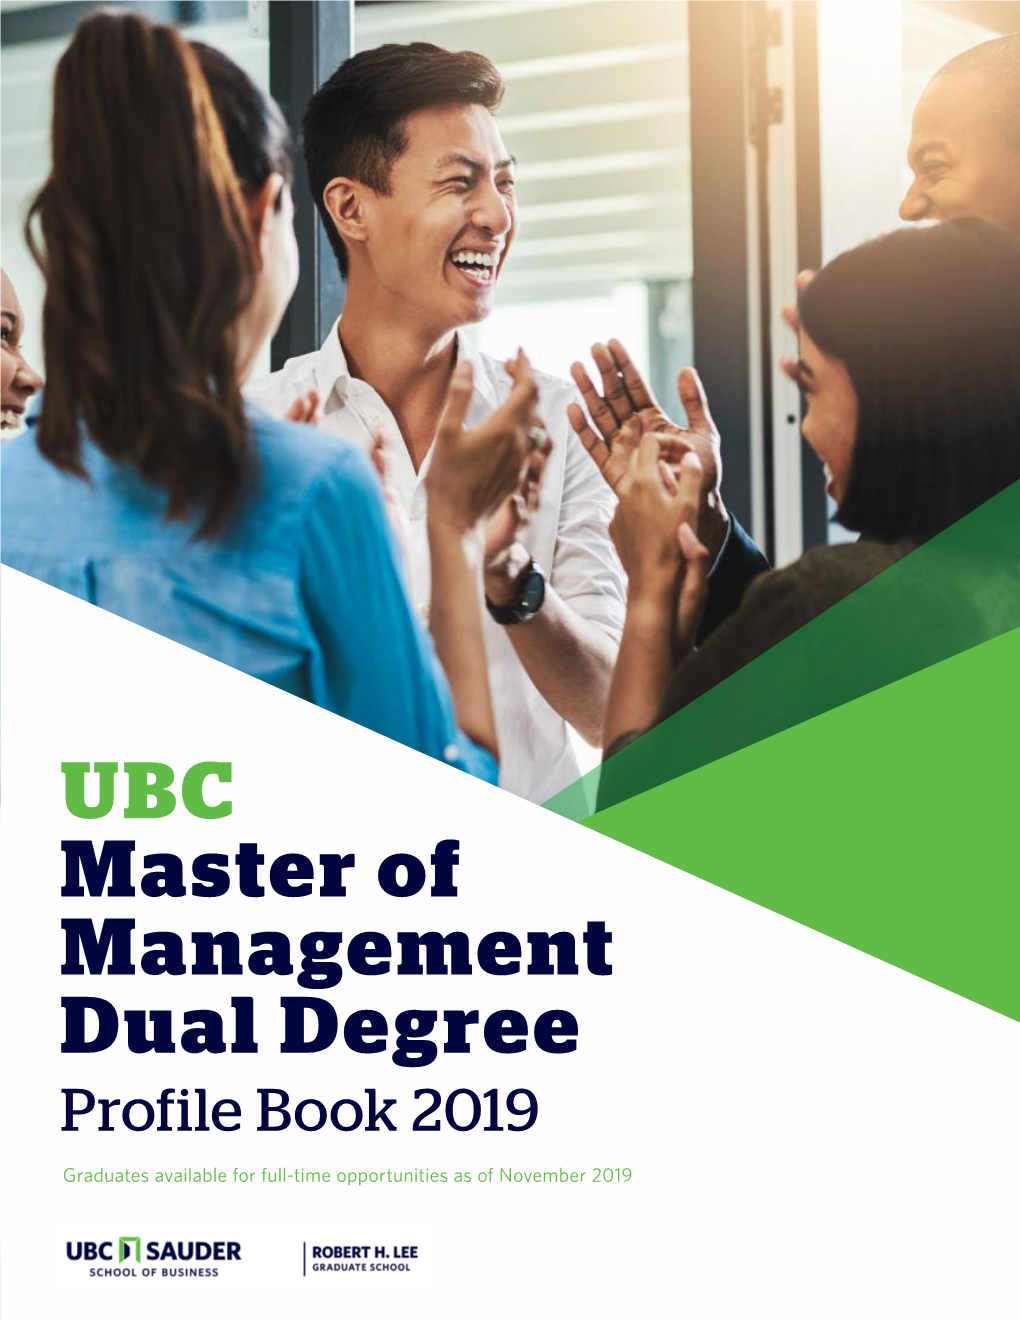 UBC Master of Management Dual Degree Profile Book 2019